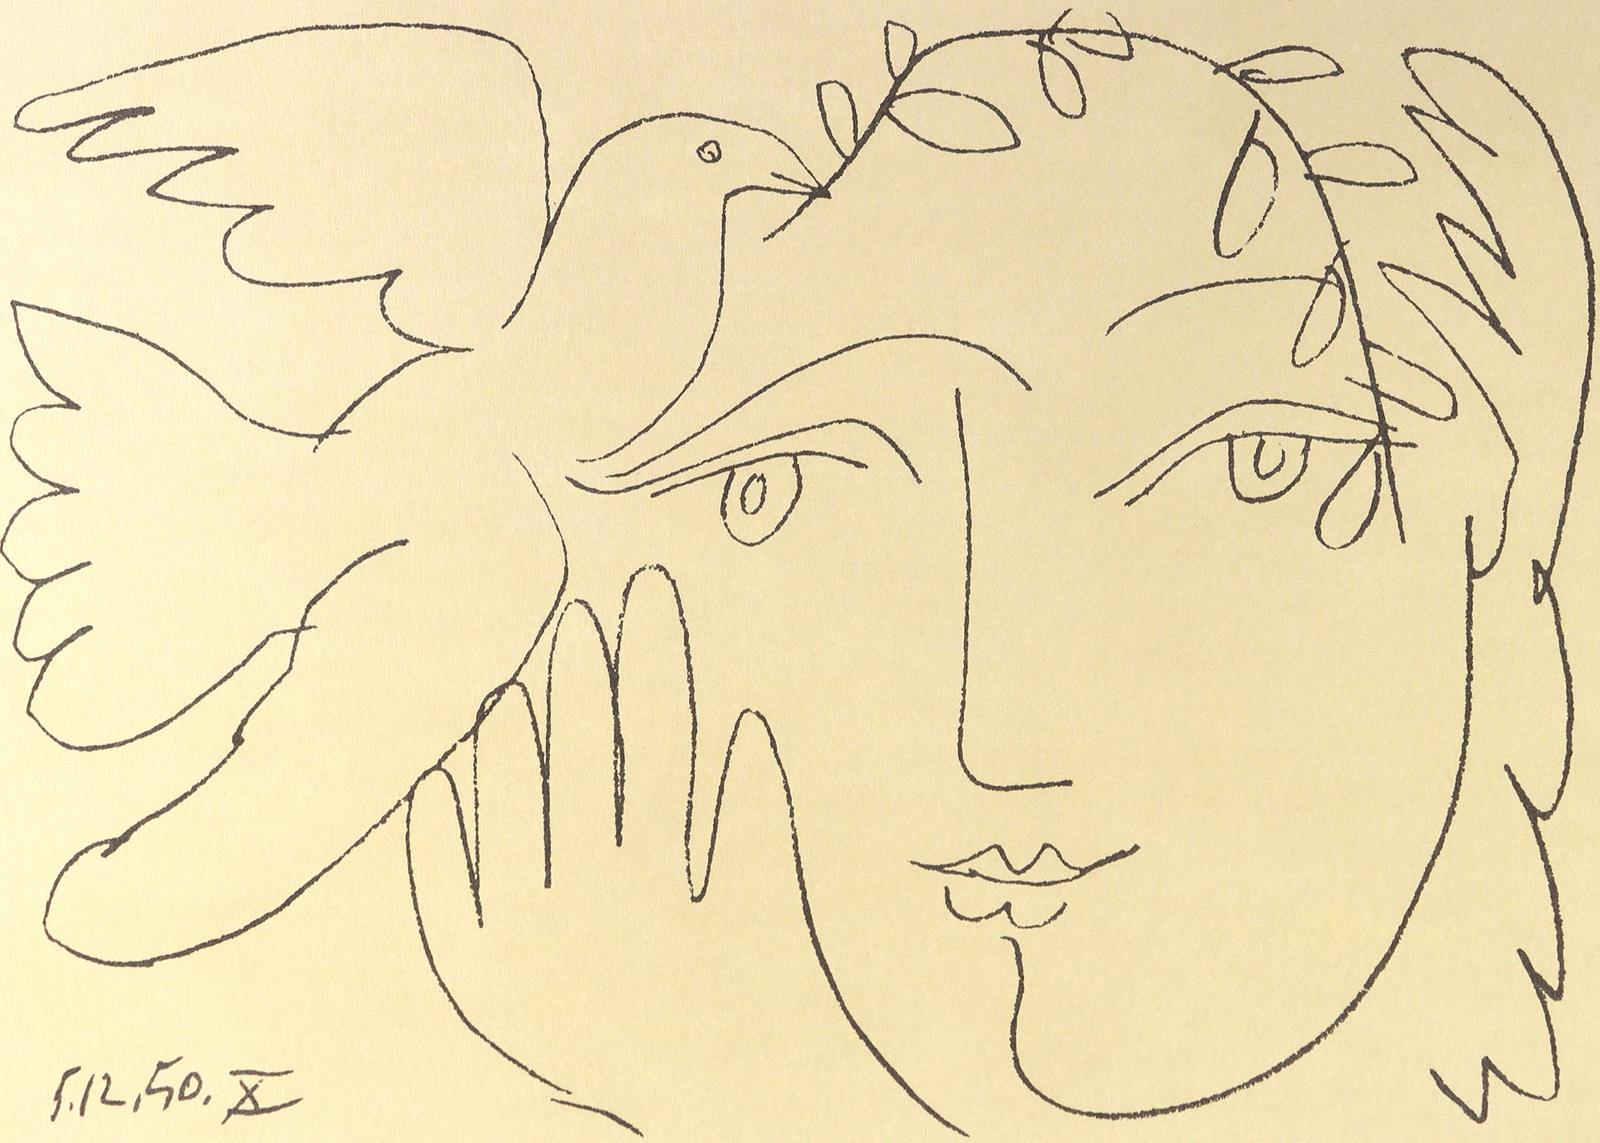 Picasso, Pablo | Bild Nr.5